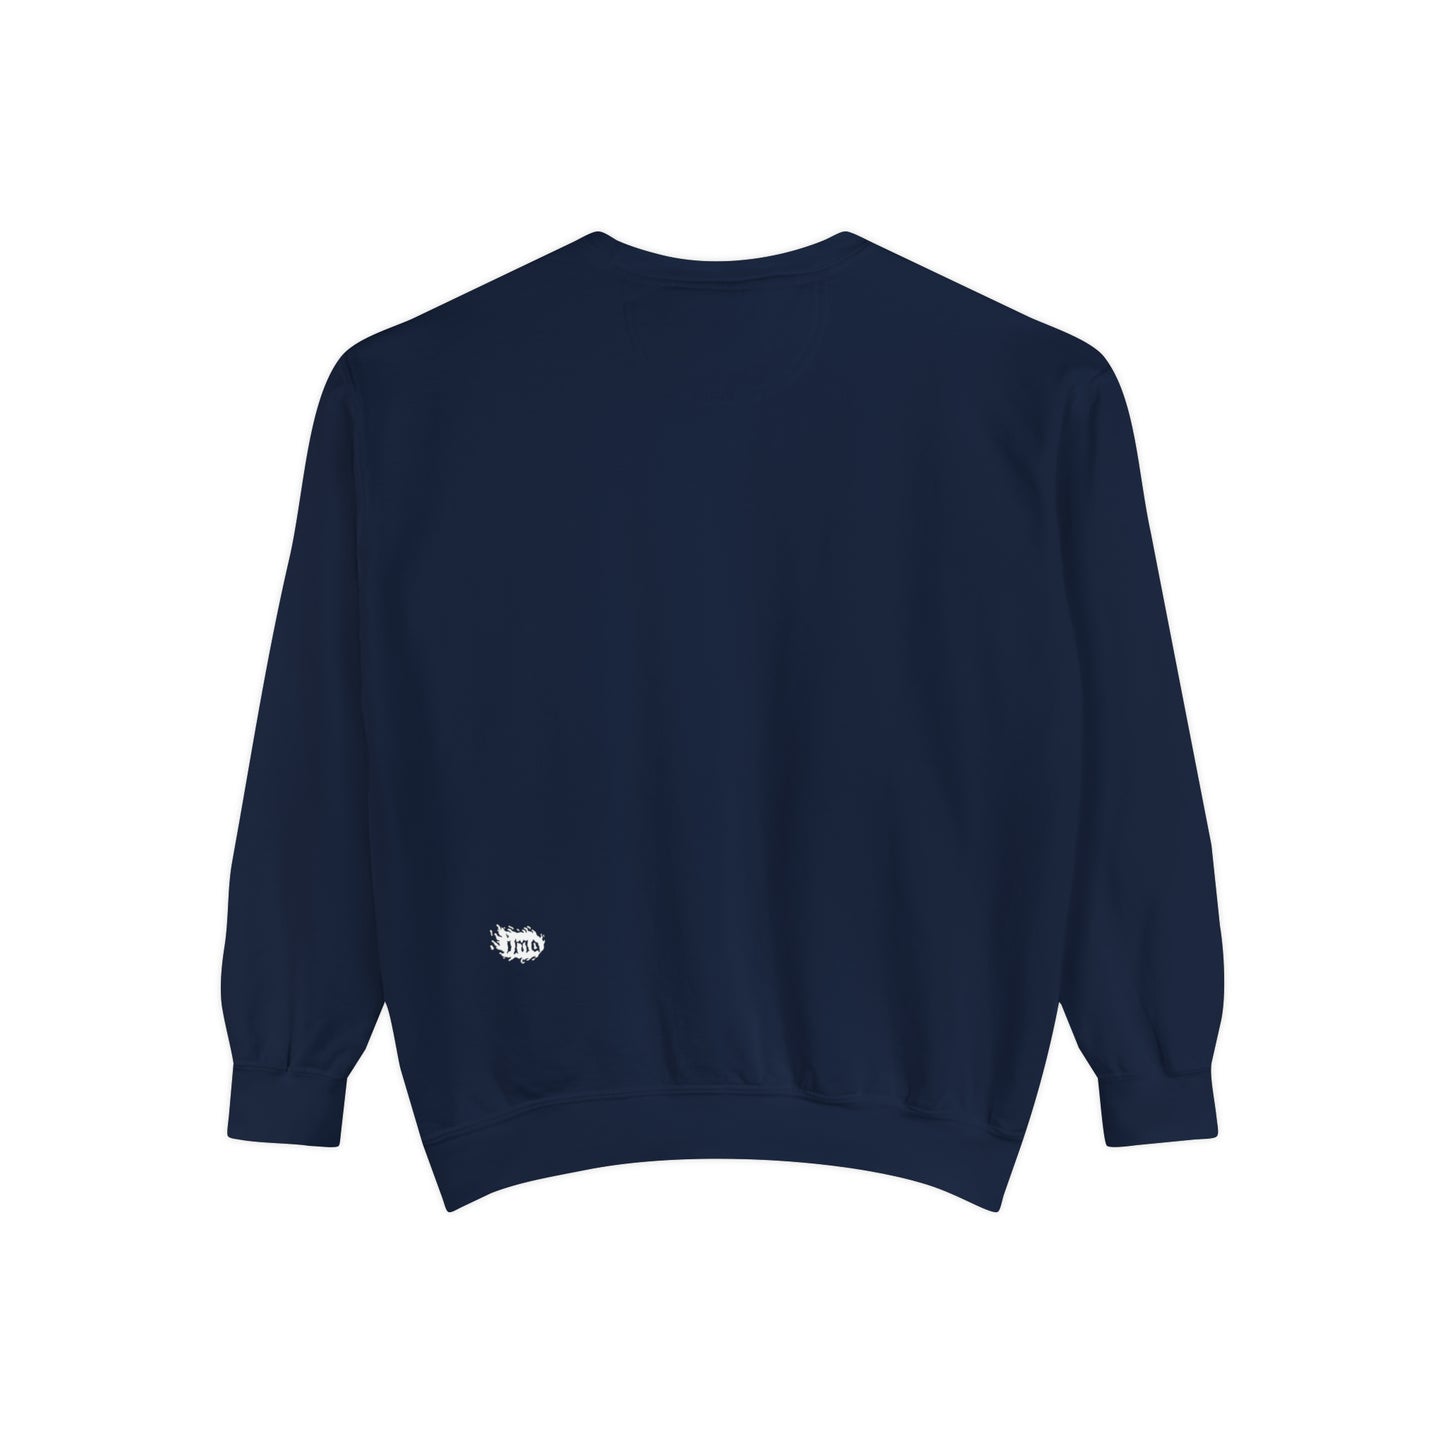 Caveman - wht - Unisex Garment-Dyed Sweatshirt